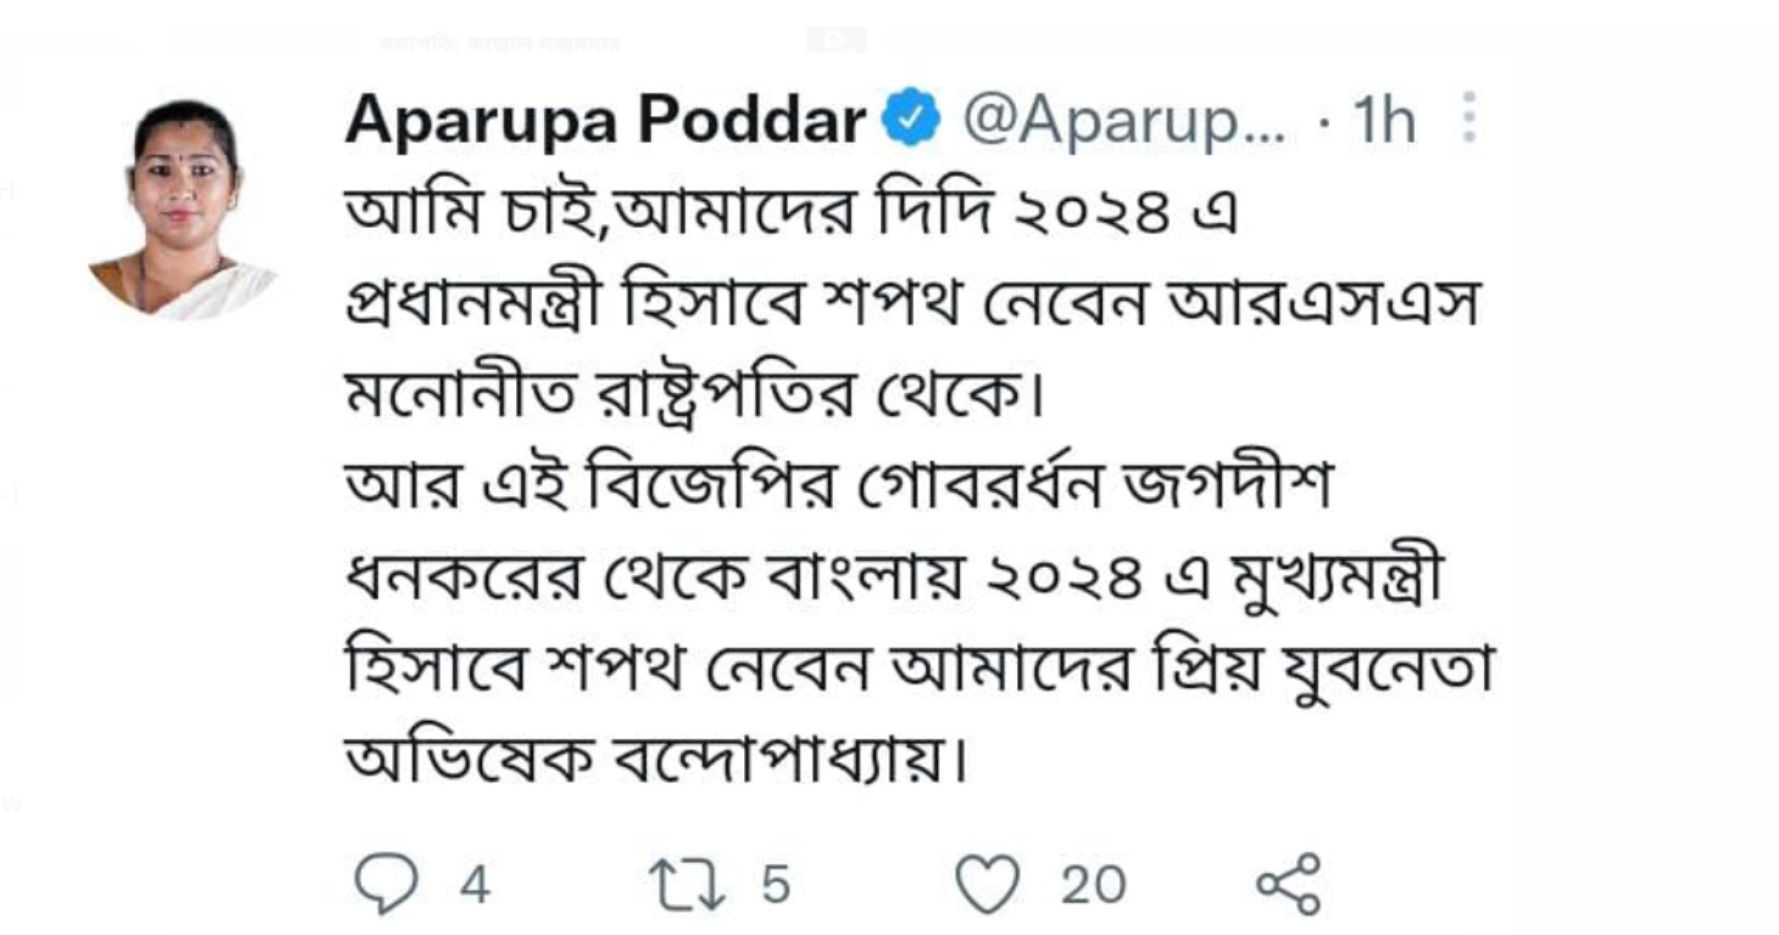 Aparupa Poddar tweet